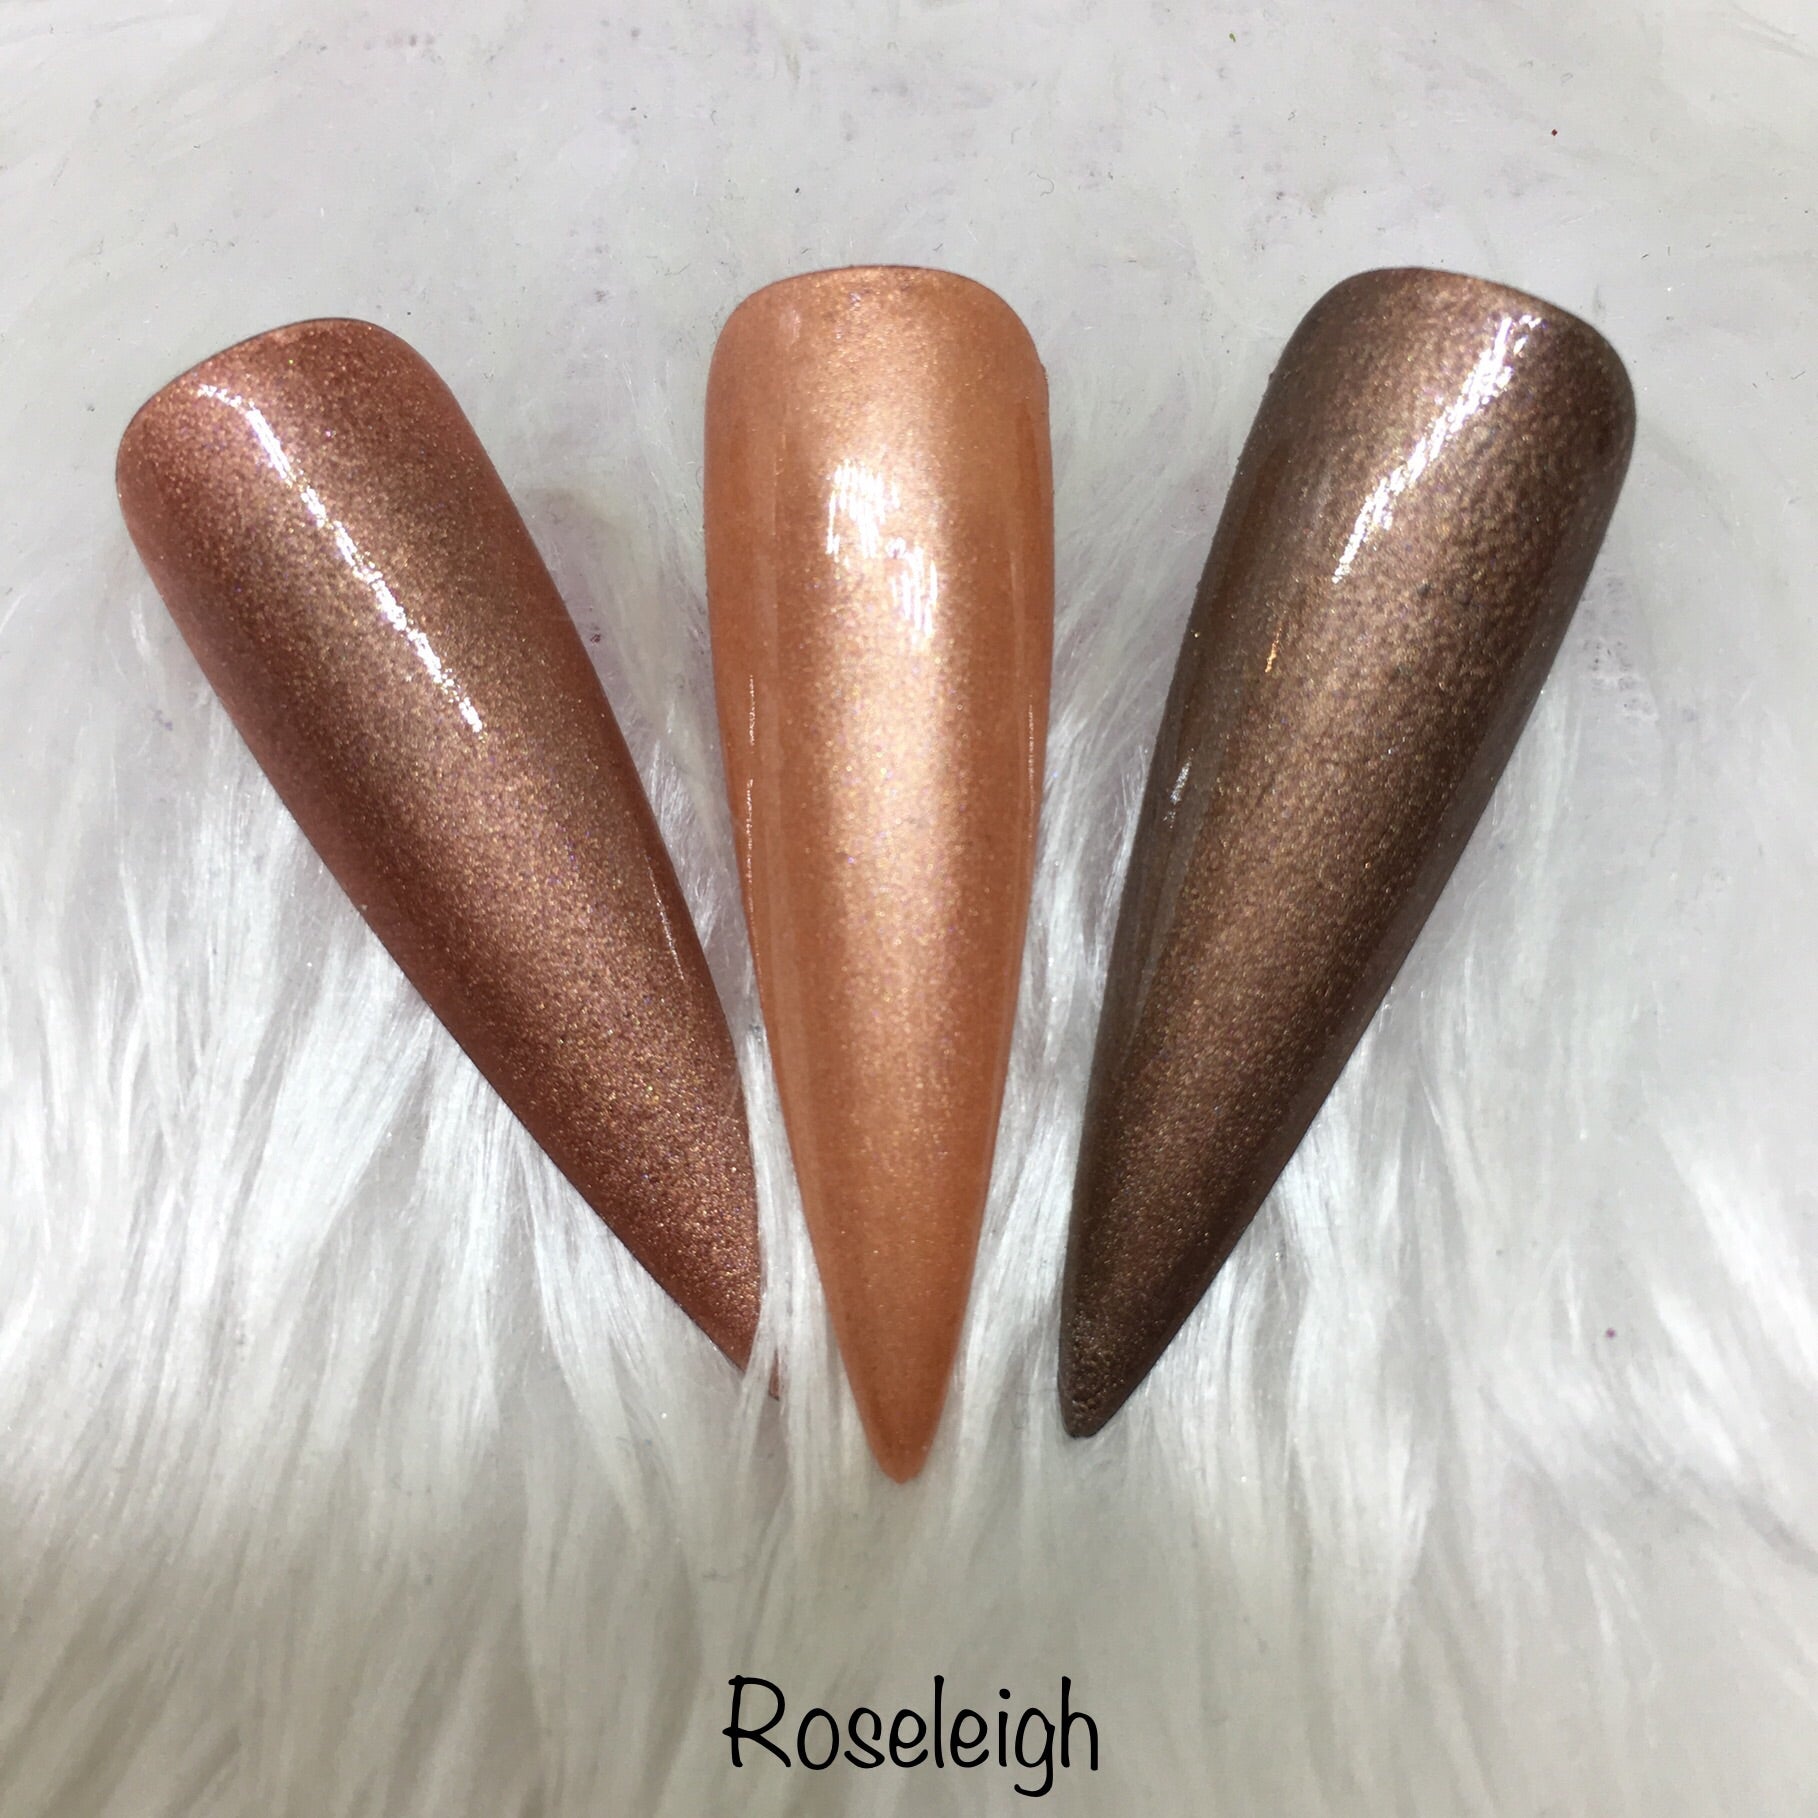 Roseleigh-Pigments-Incandescent Shine Ltd